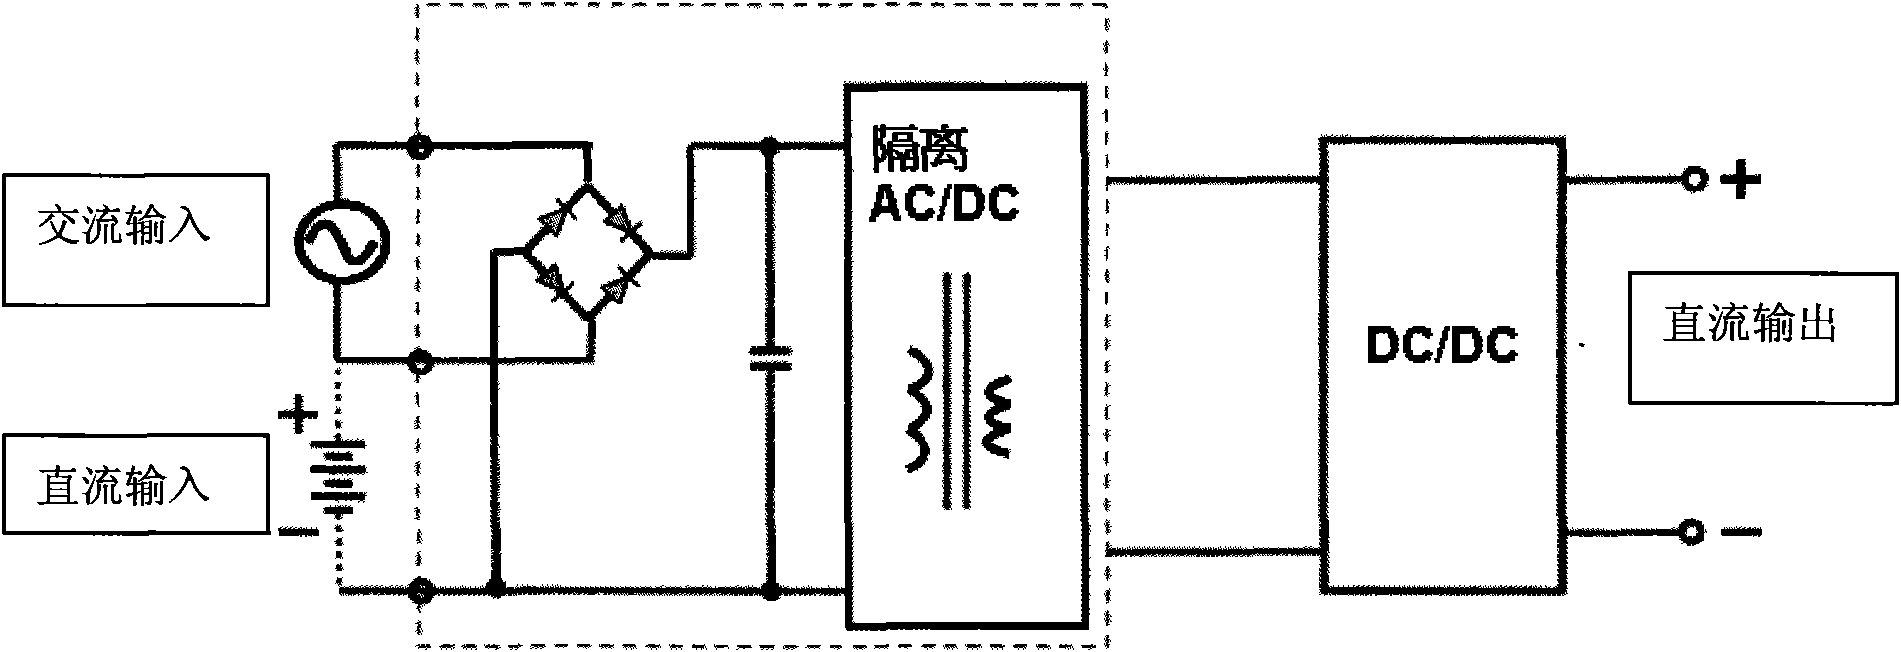 Method for building industrial AC/DC wide range input power module